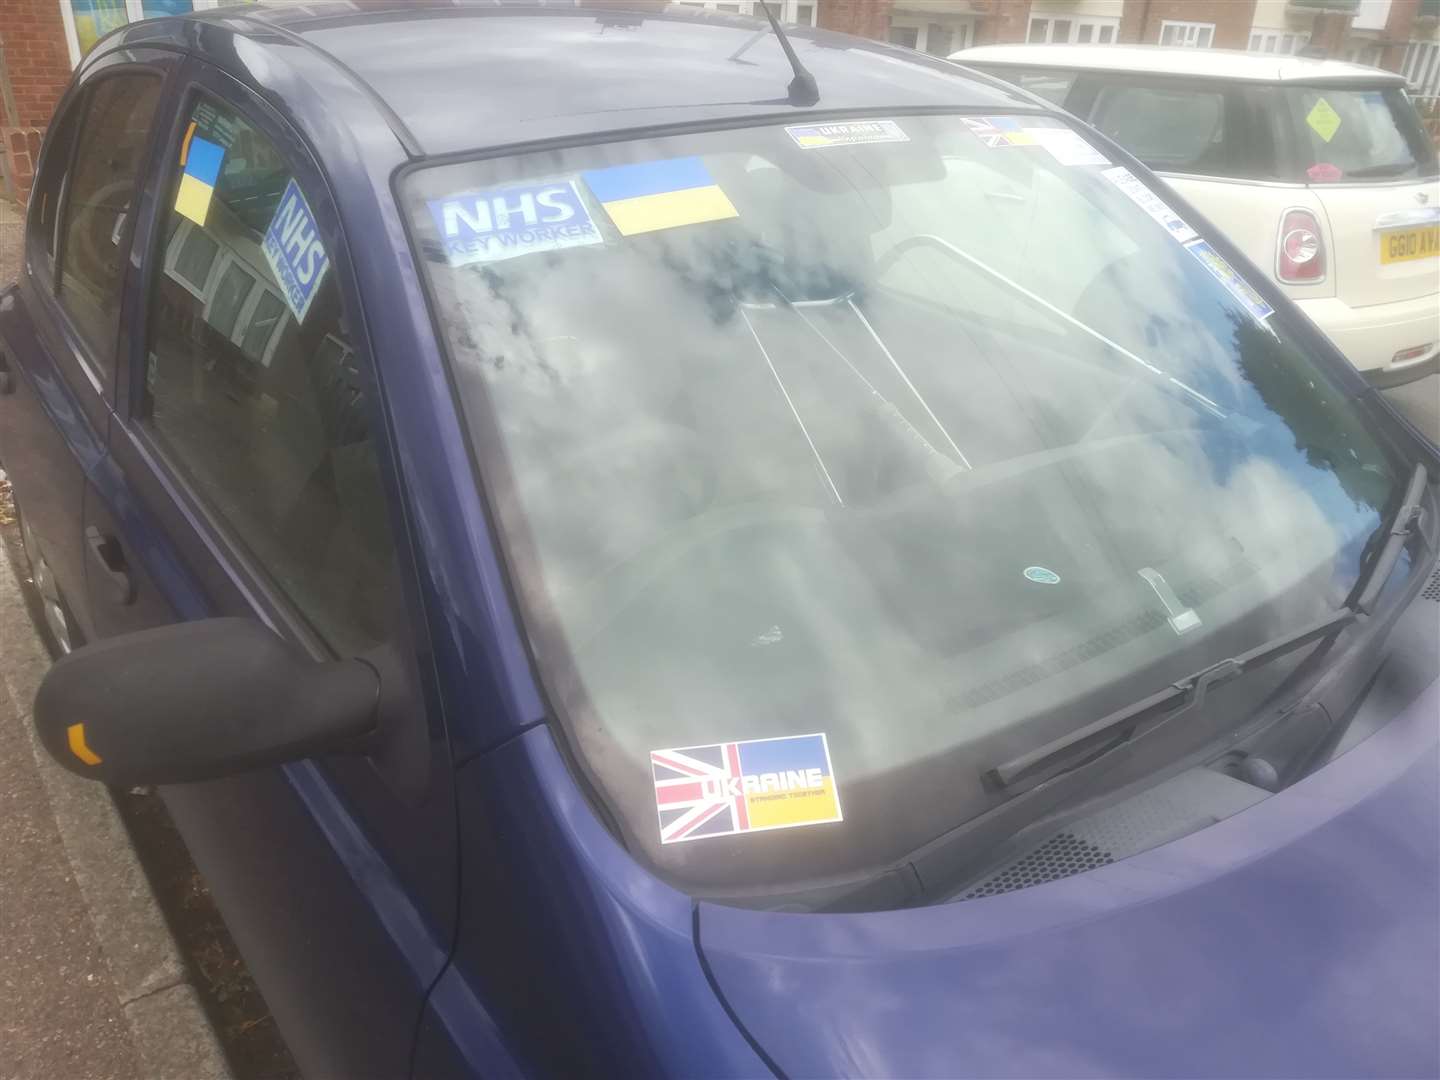 Brian Grove's car with Ukrainian flag stickers